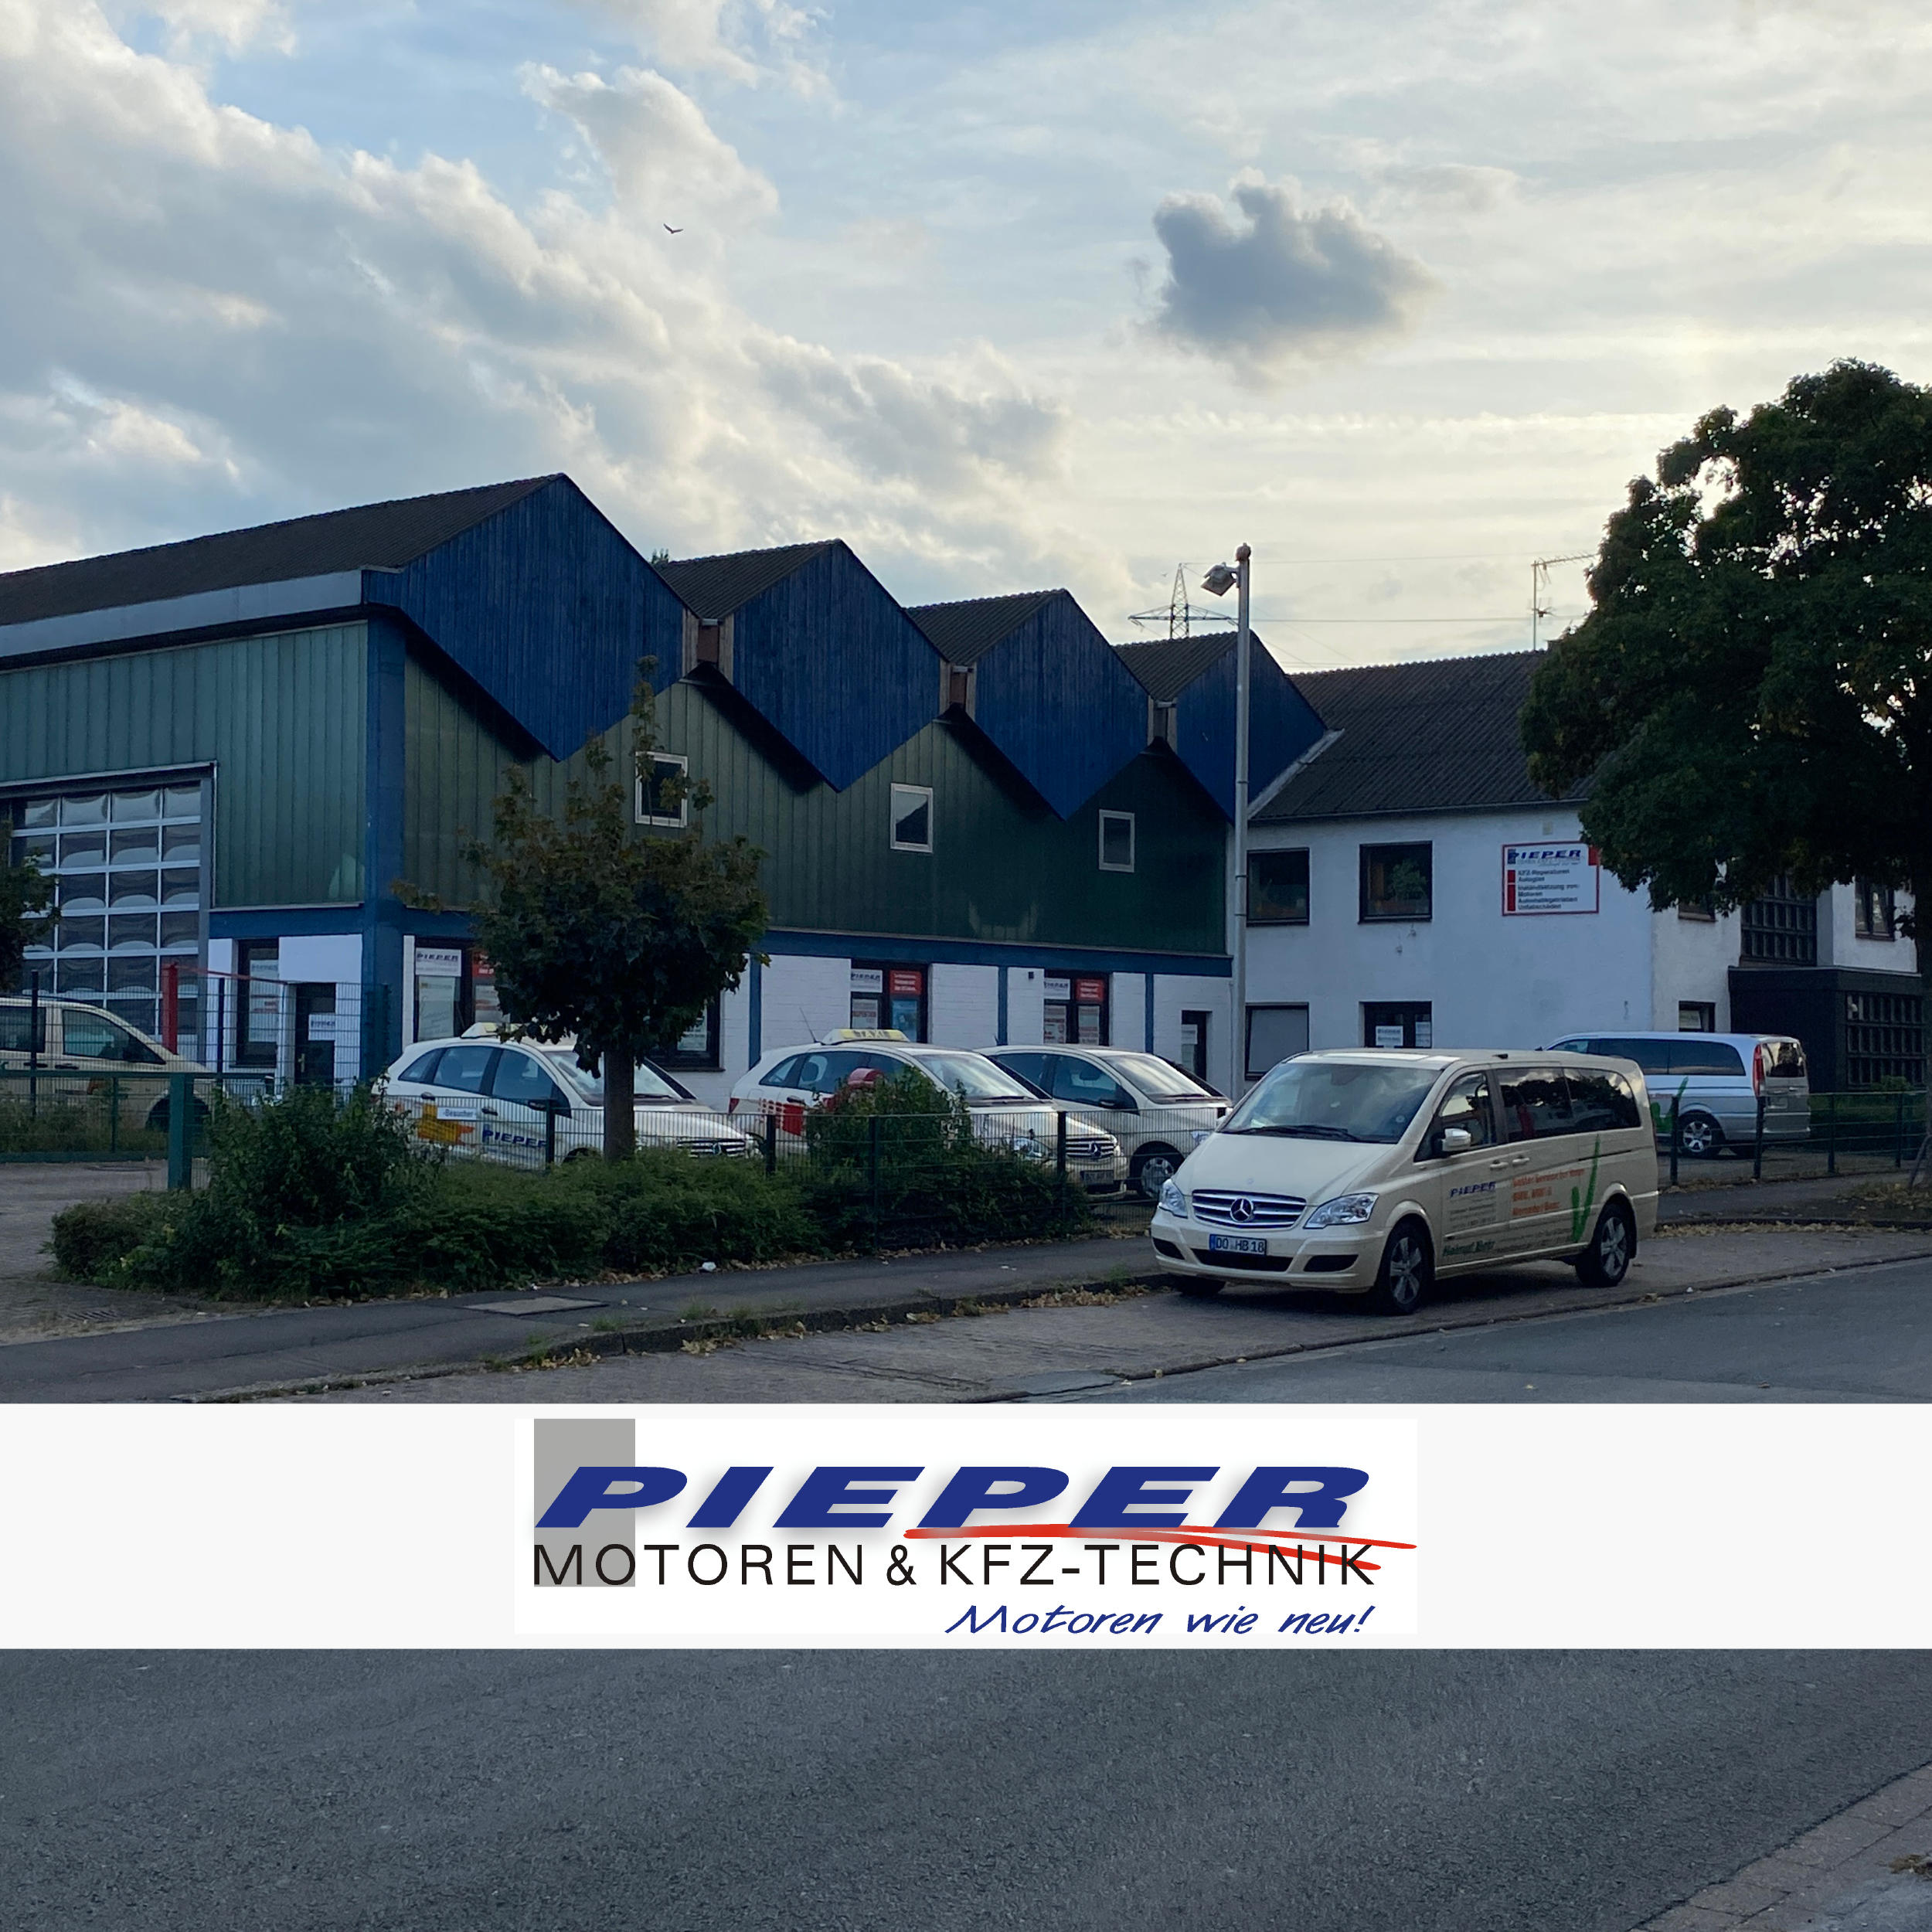 Pieper Motoren & Kfz-Technik GmbH & Co. KG  